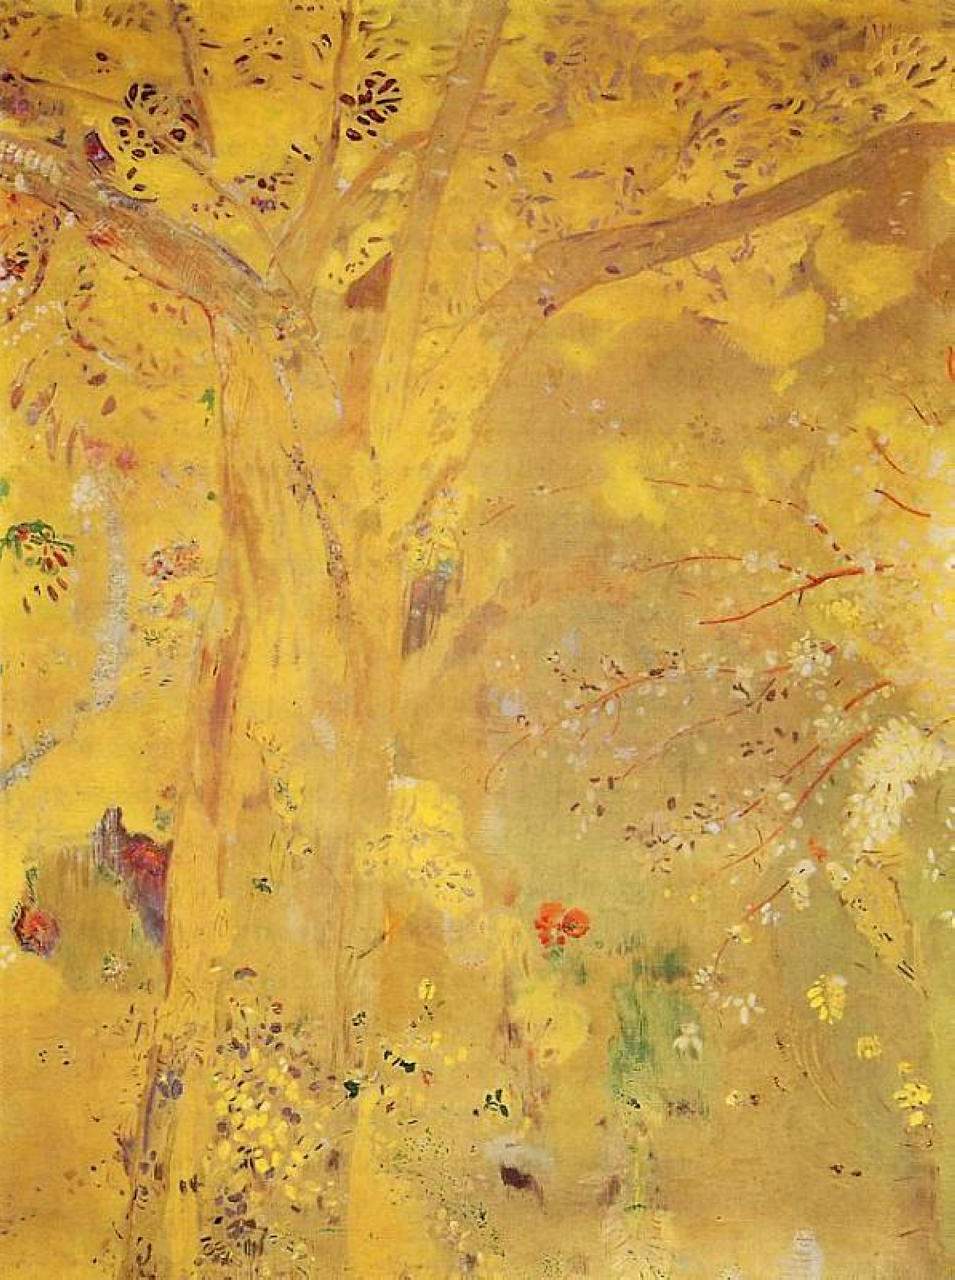 Tree Against a Yellow Background — Одилон Редон